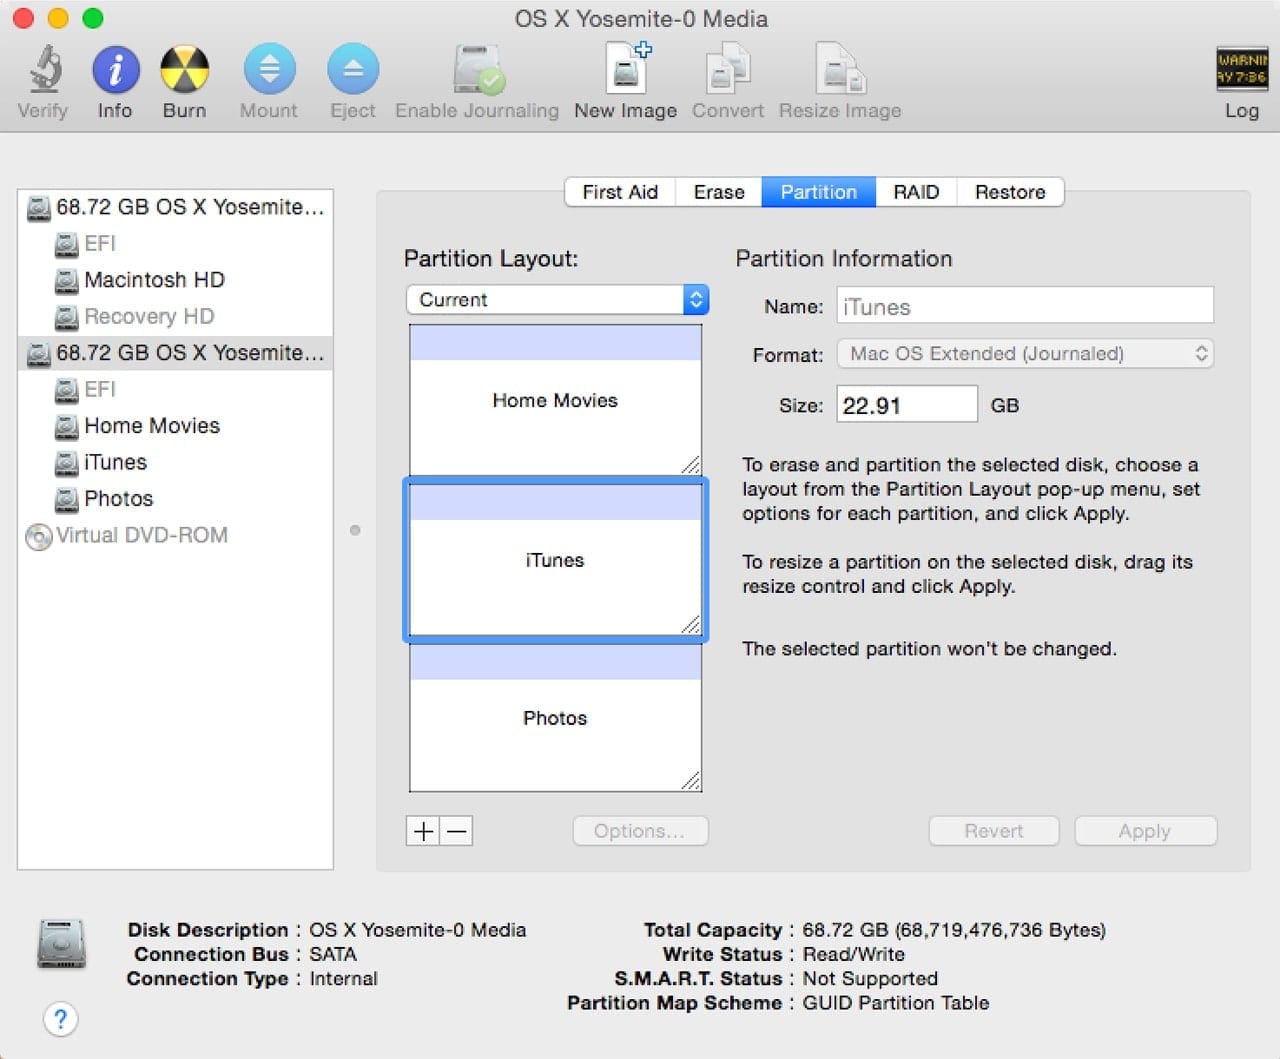 photo resizing software for mac free